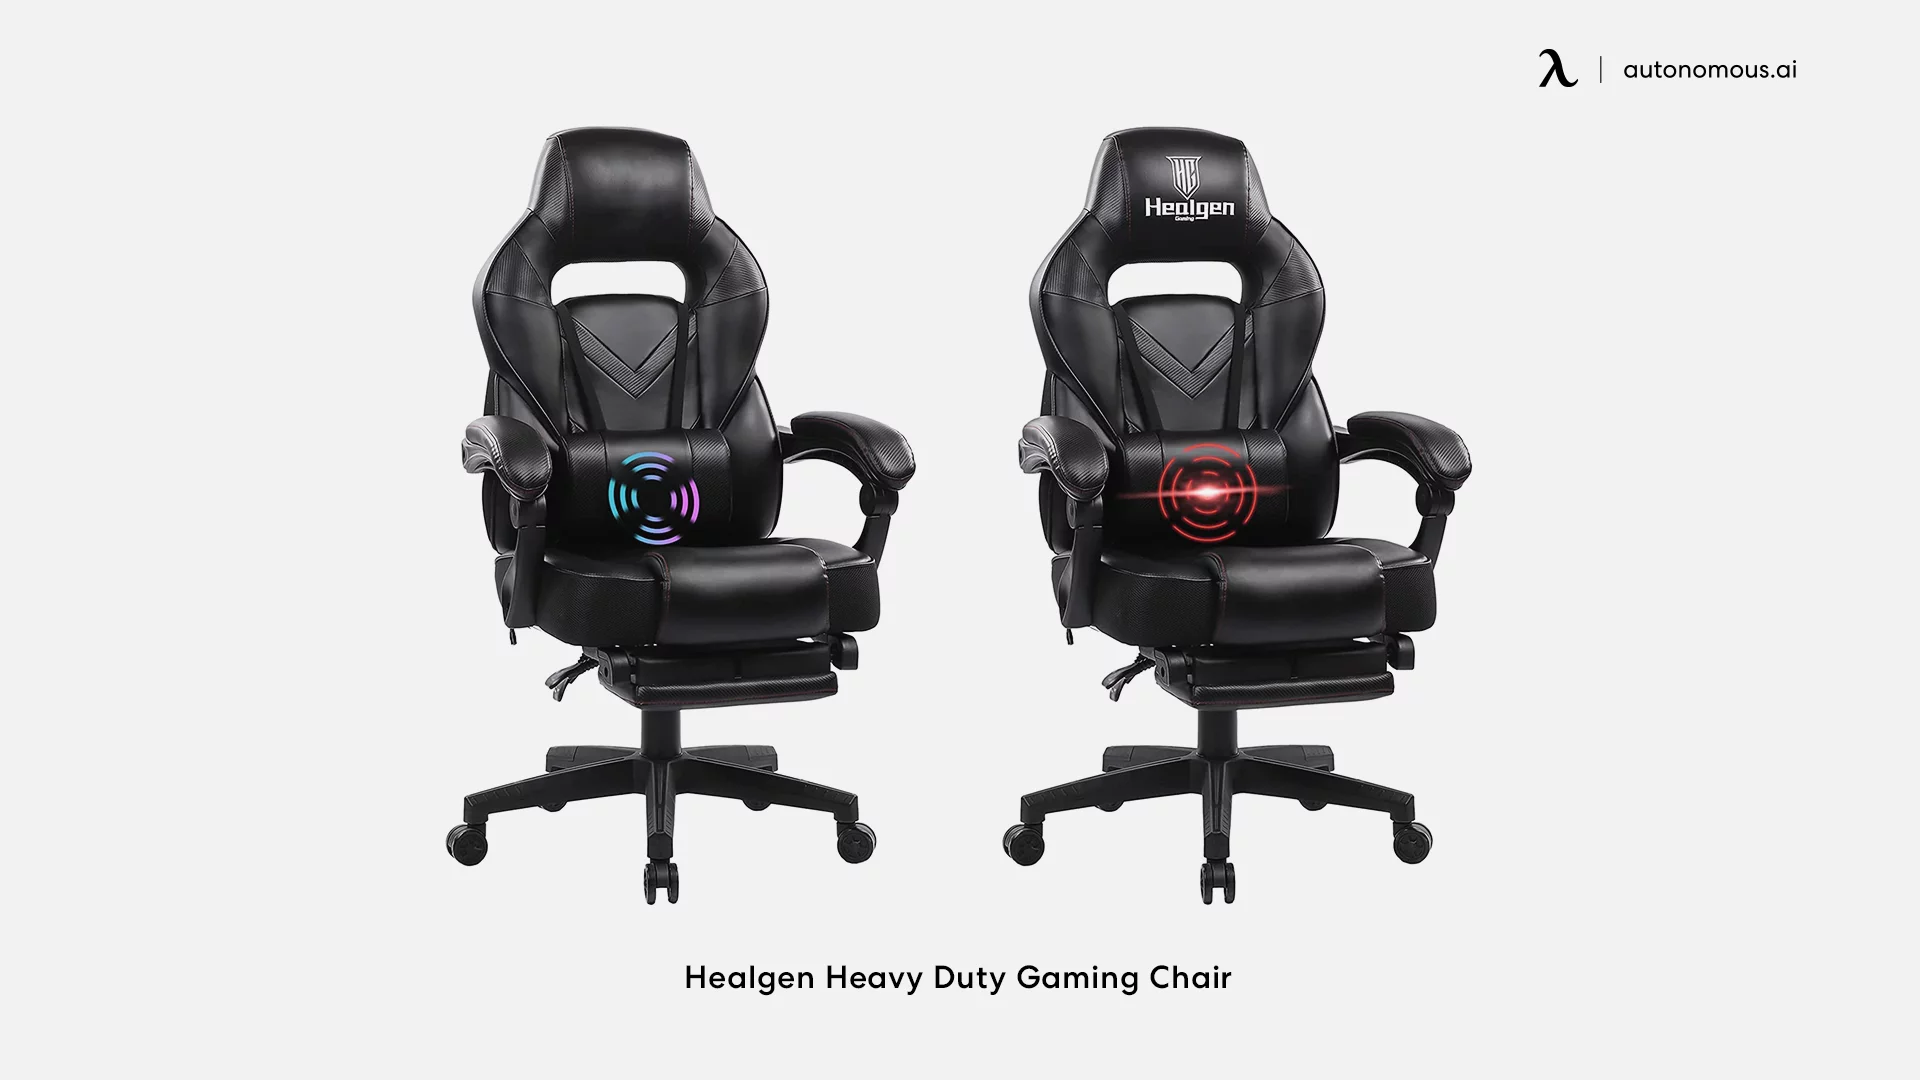 Healgen Heavy Duty Gaming Chair